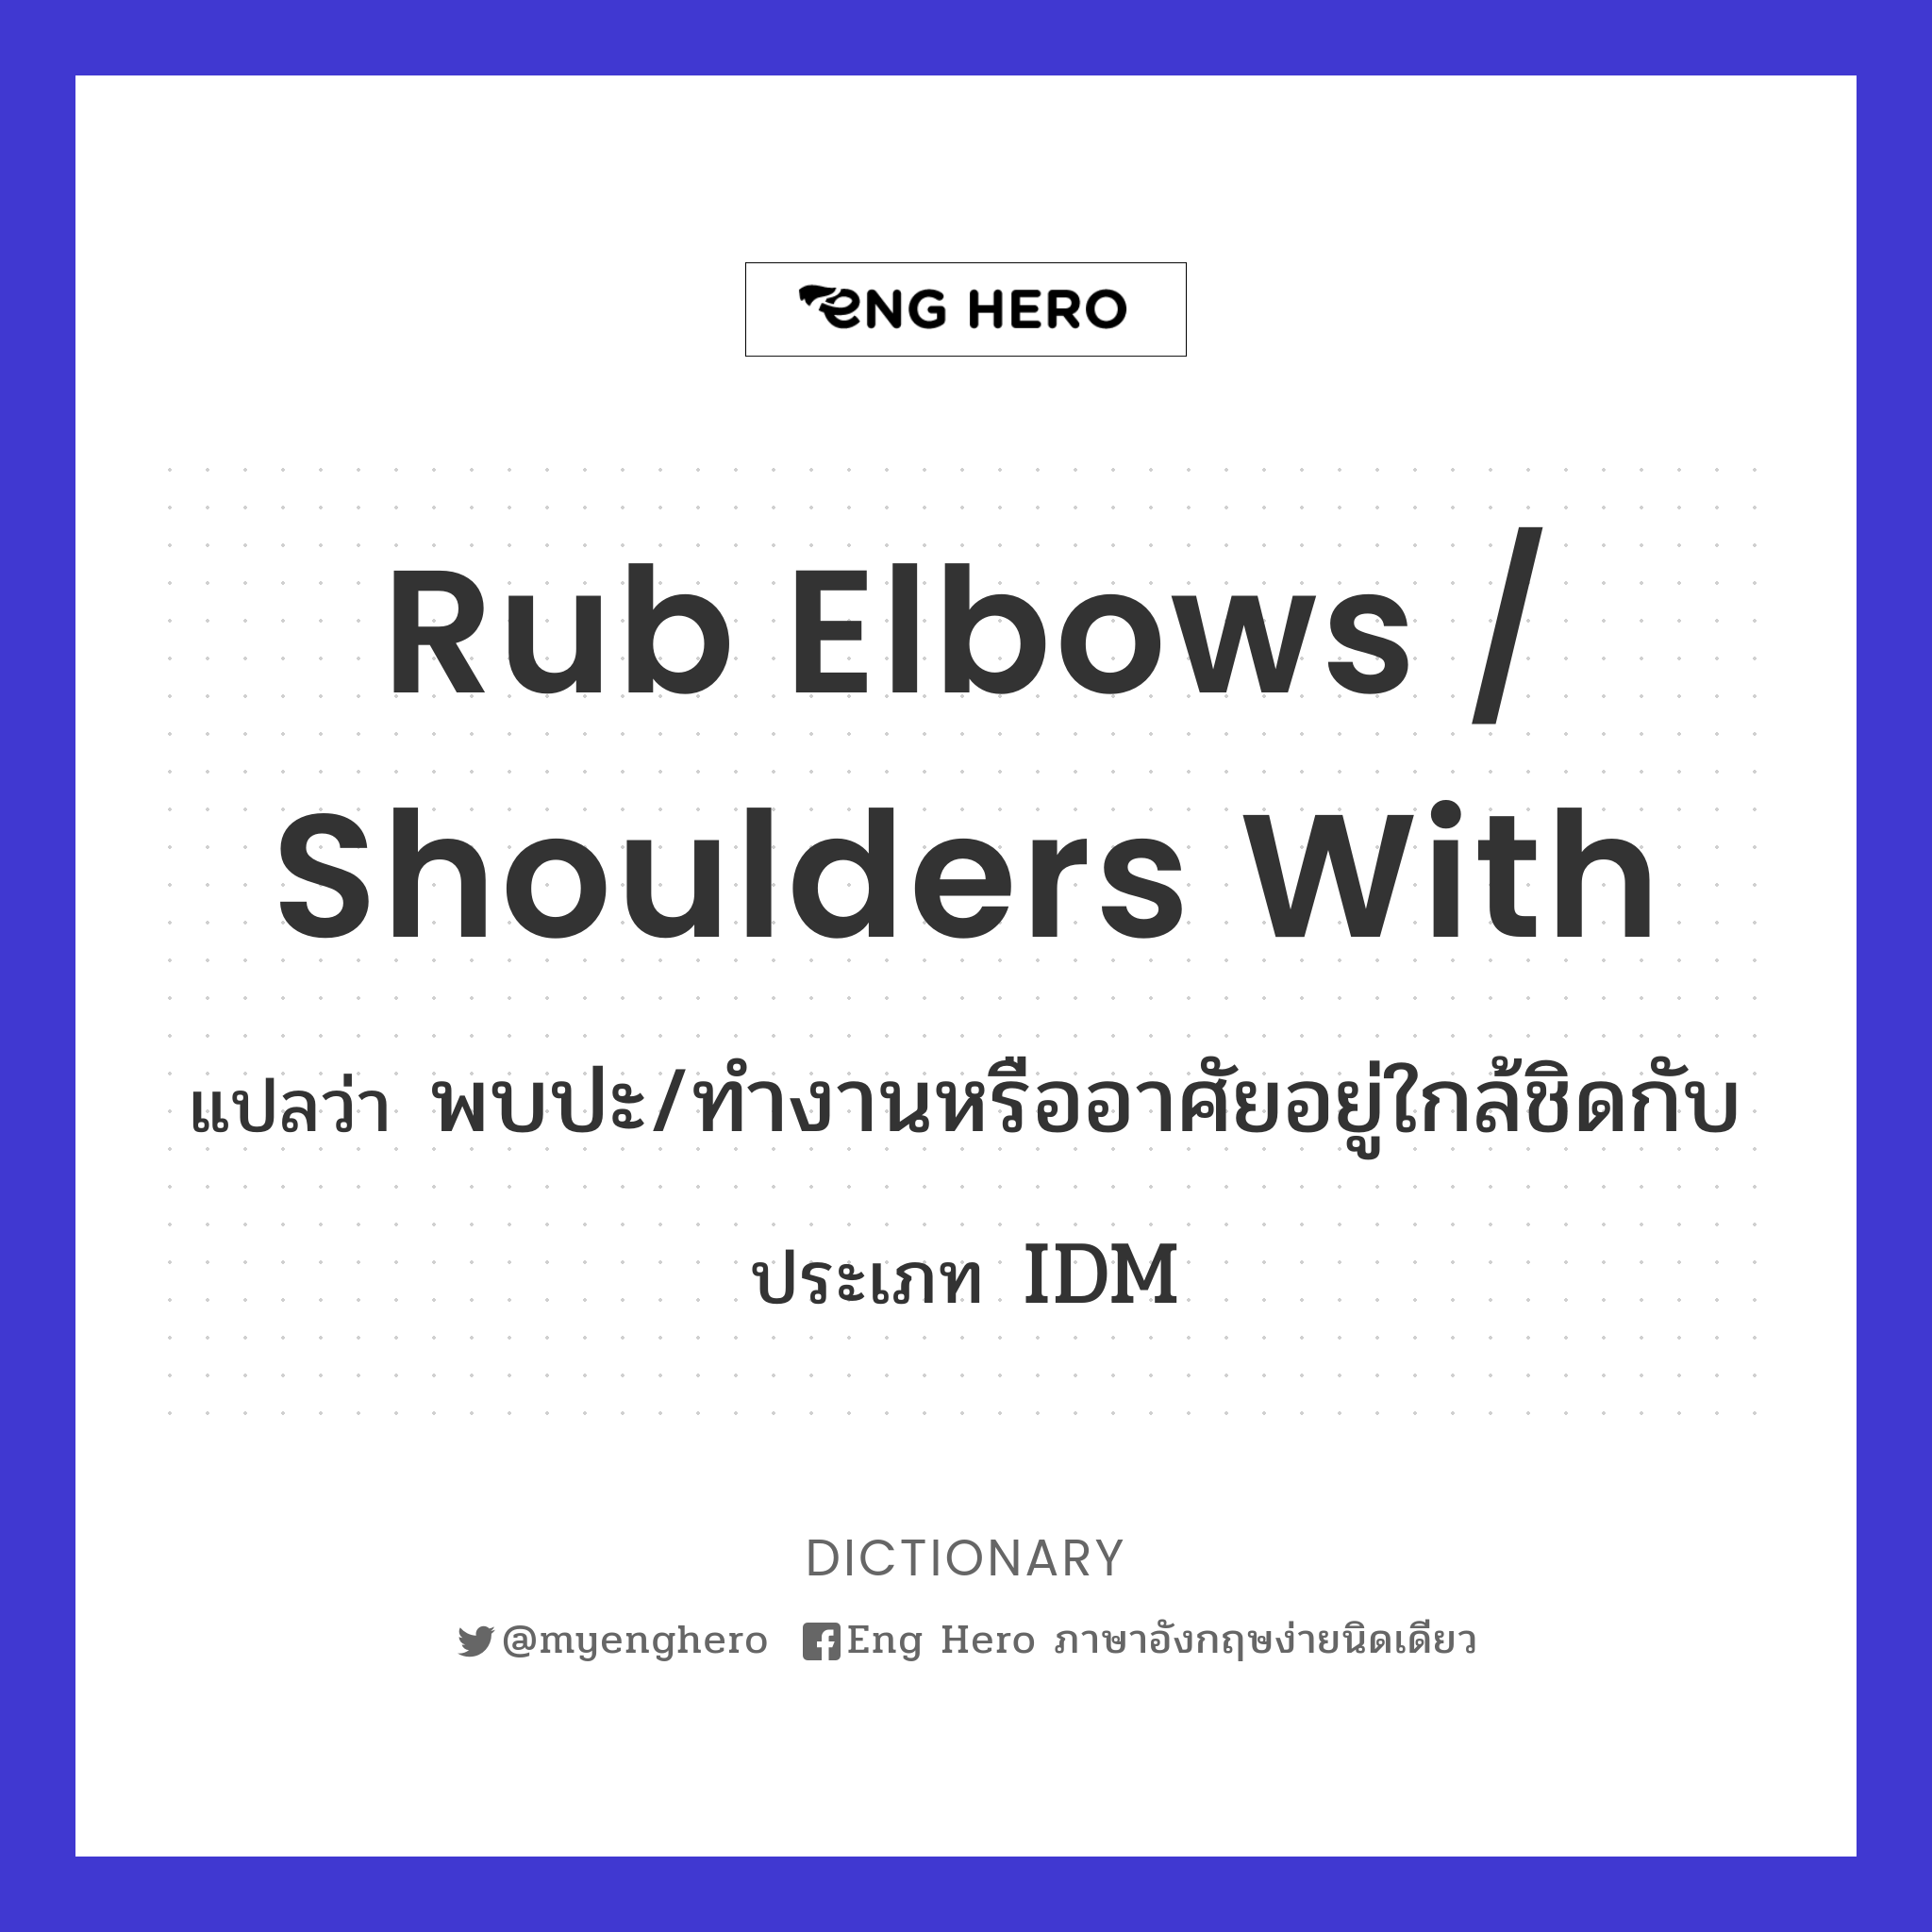 rub elbows / shoulders with